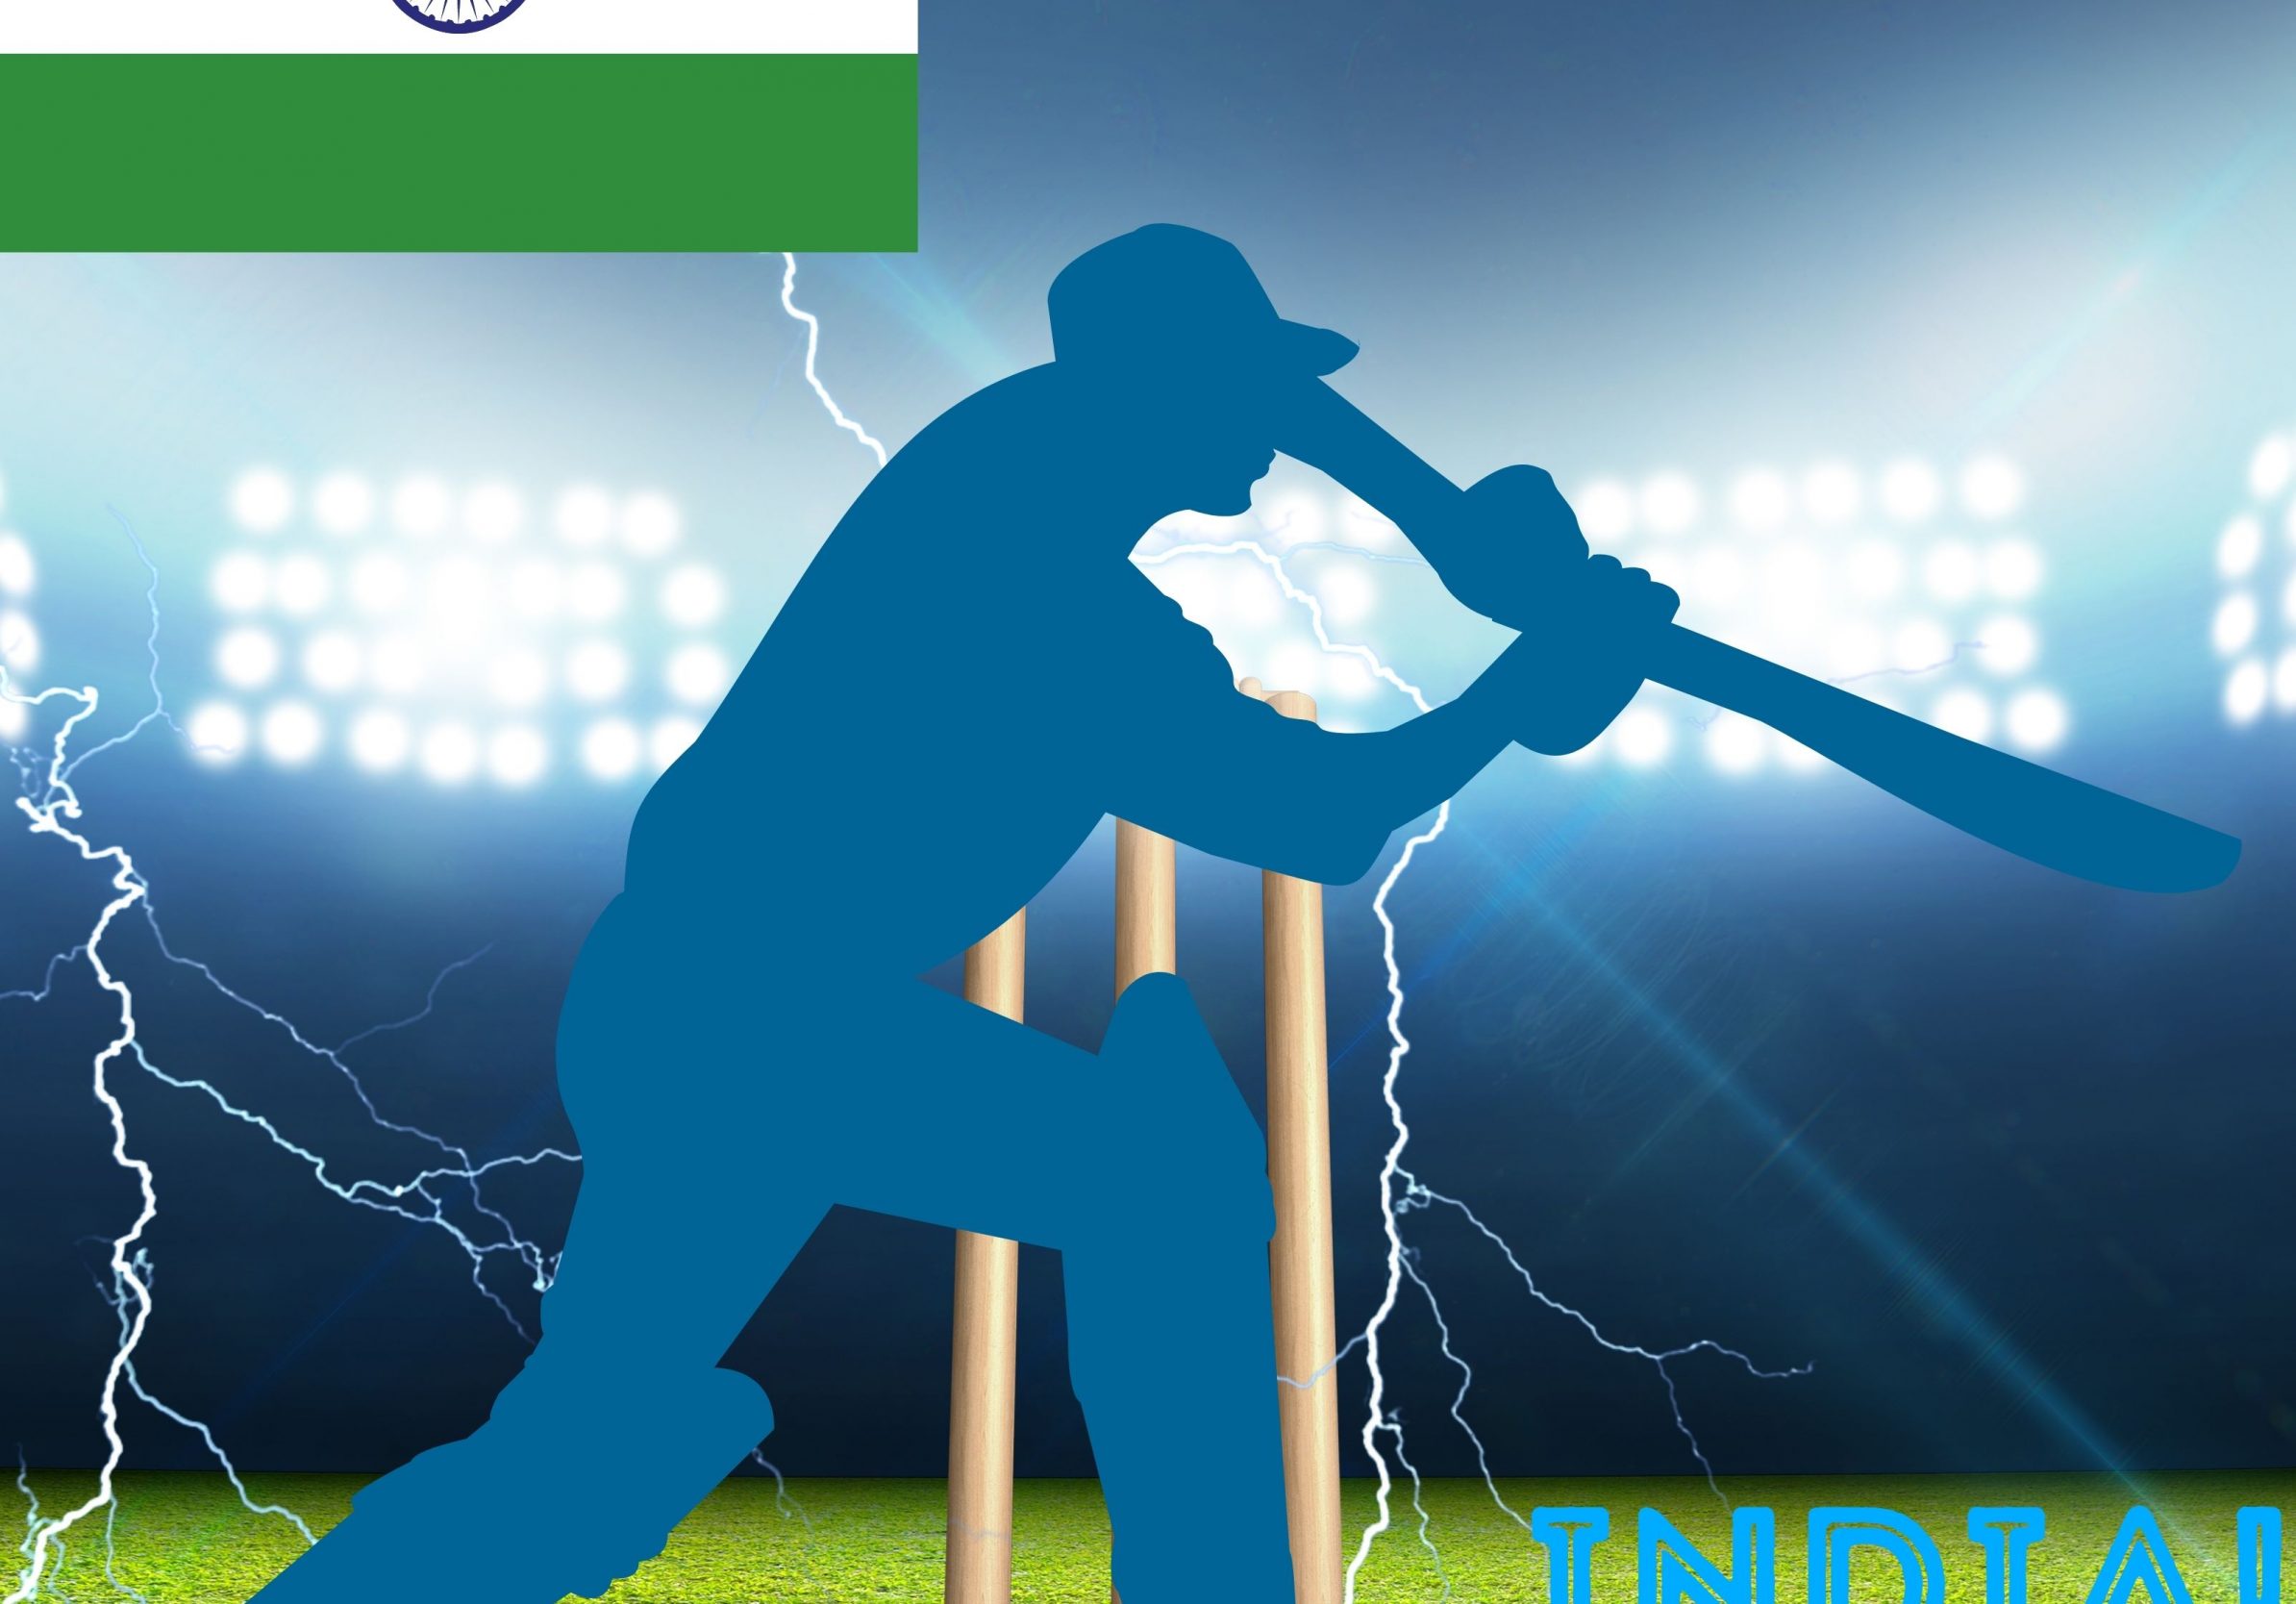 2388x1668 iPad Pro wallpapers India Cricket Stadium iPad Wallpaper 2388x1668 pixels resolution